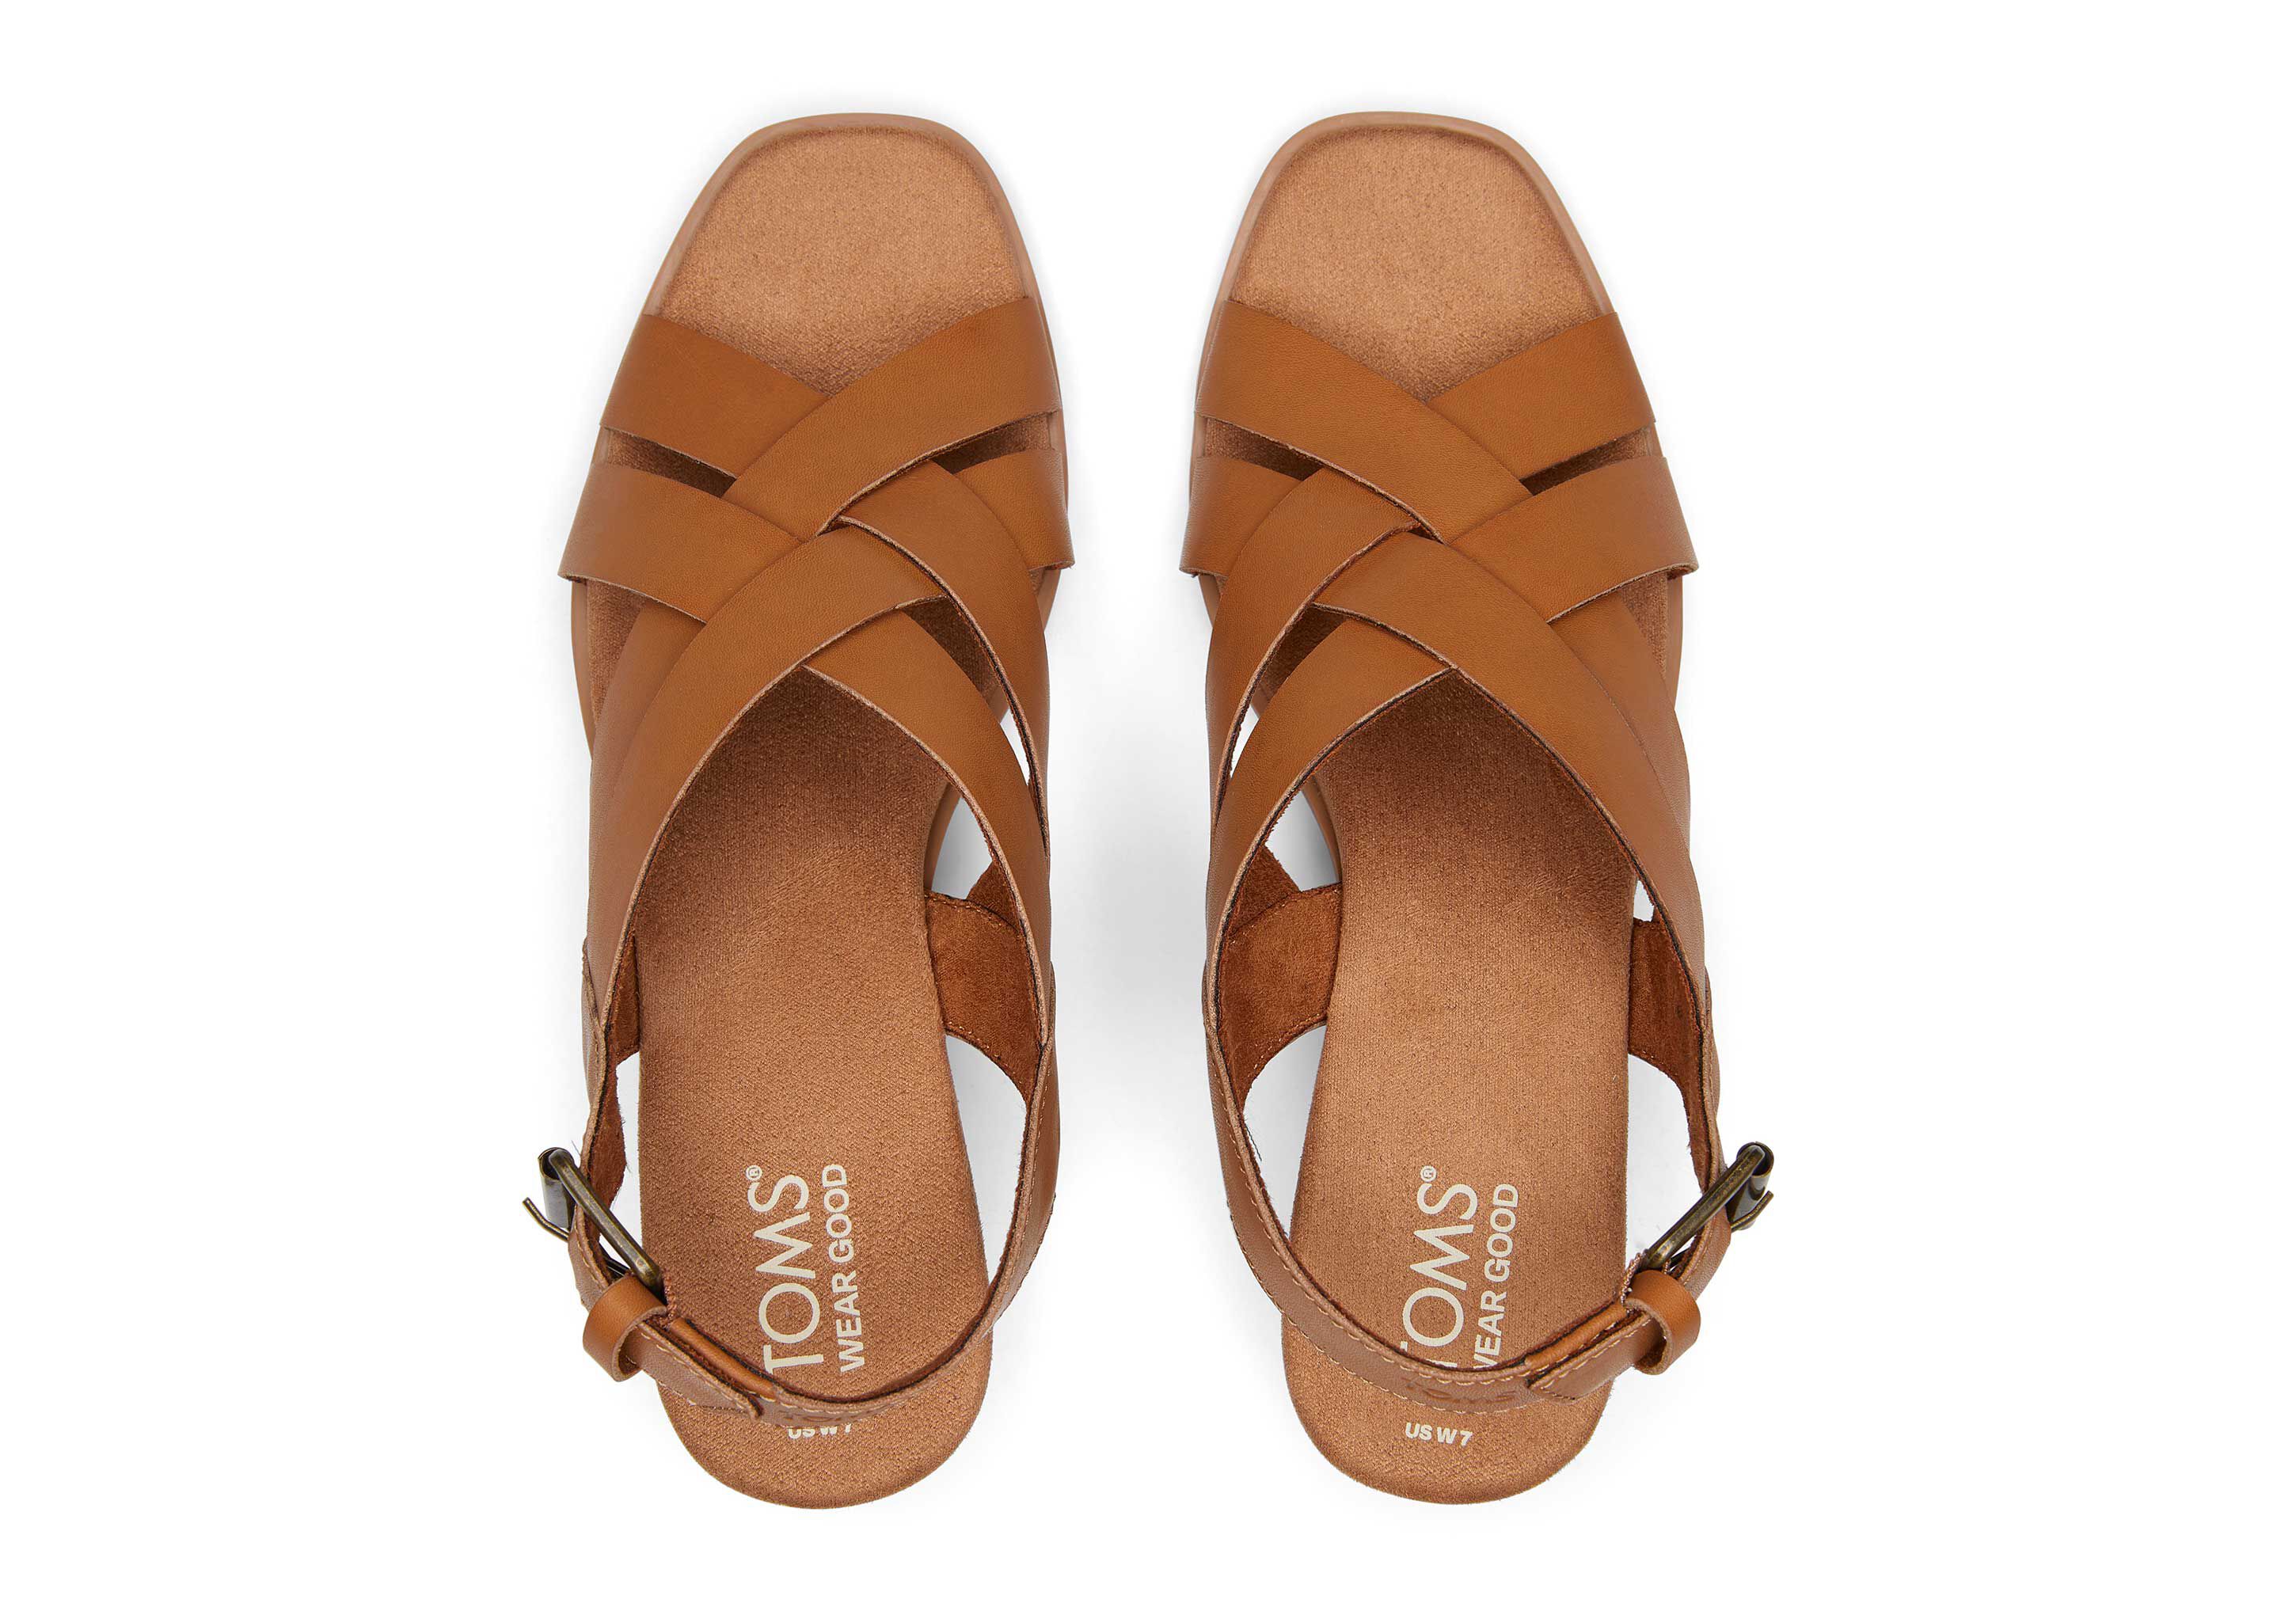 Gracie Tan Leather Wedge Sandal